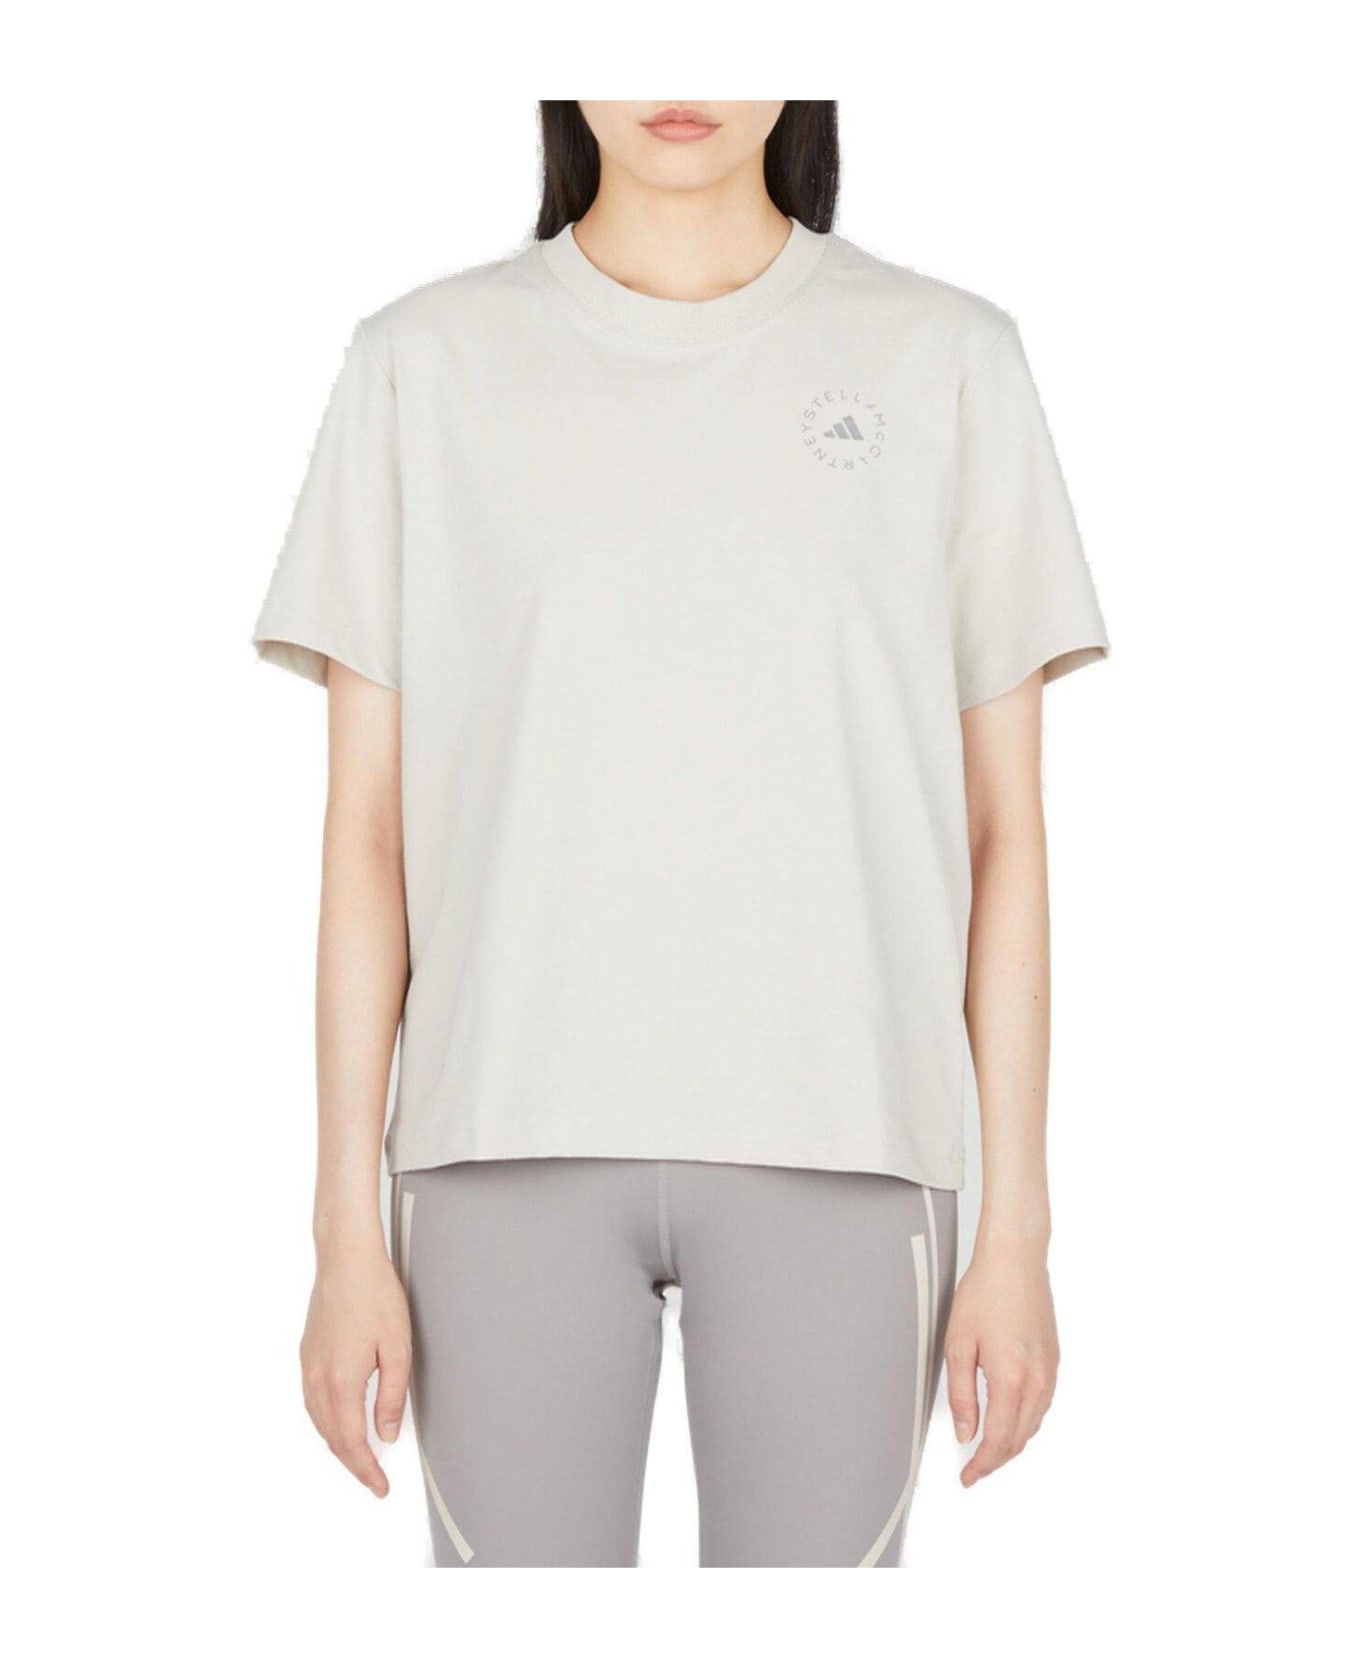 Adidas by Stella McCartney Truecasuals Crewneck T-shirt - Gobi Dove Grey